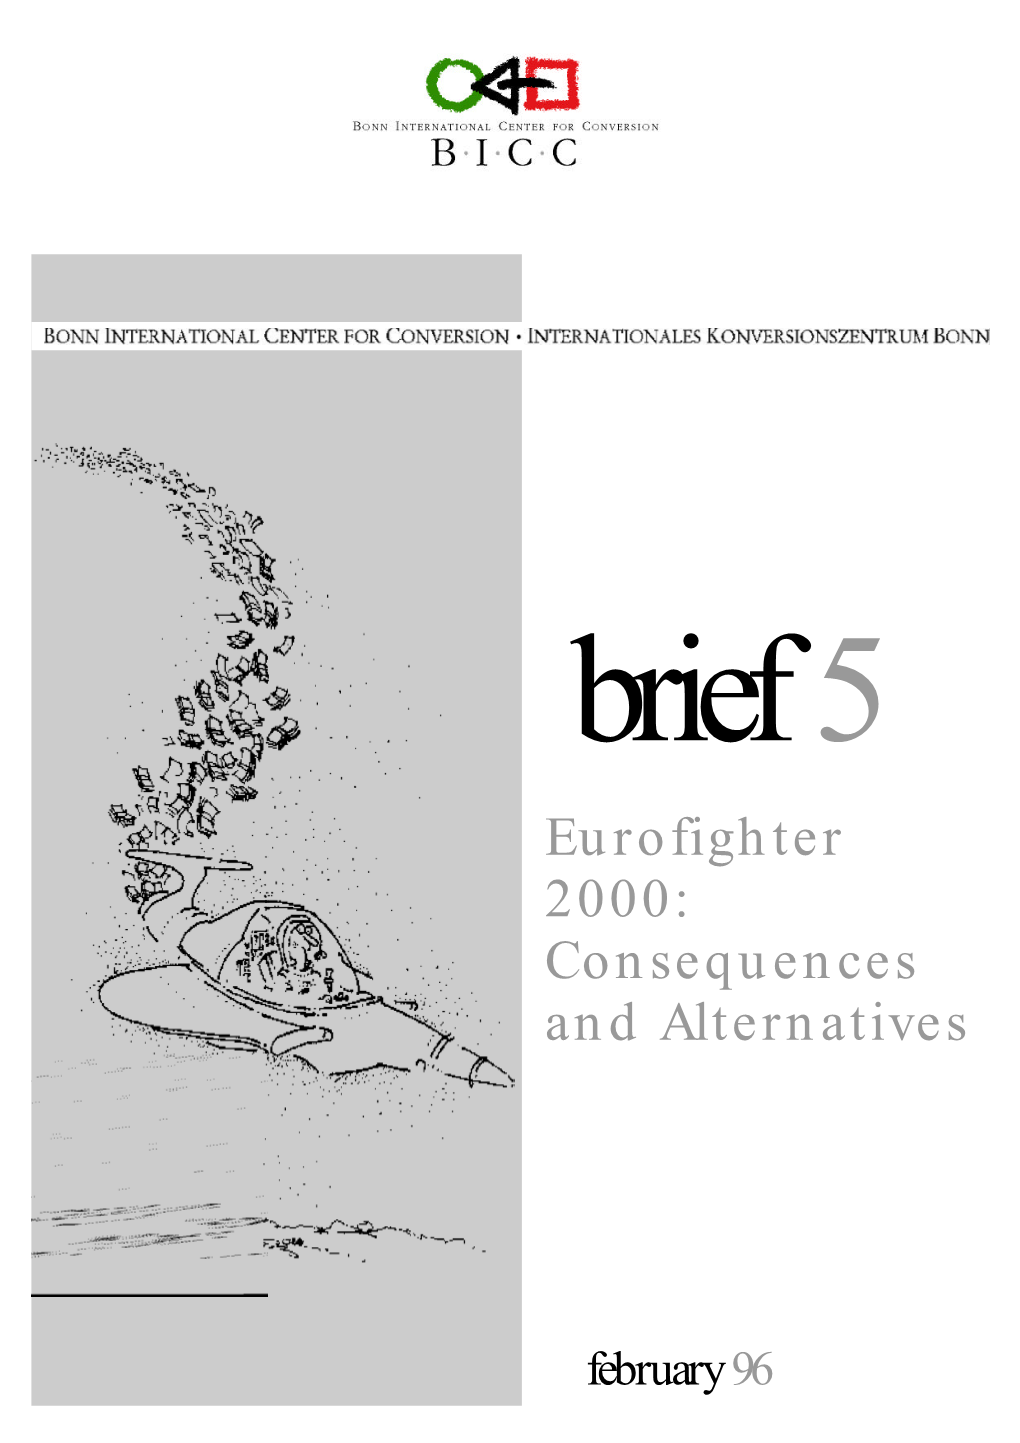 Brief5: Eurofighter 2000